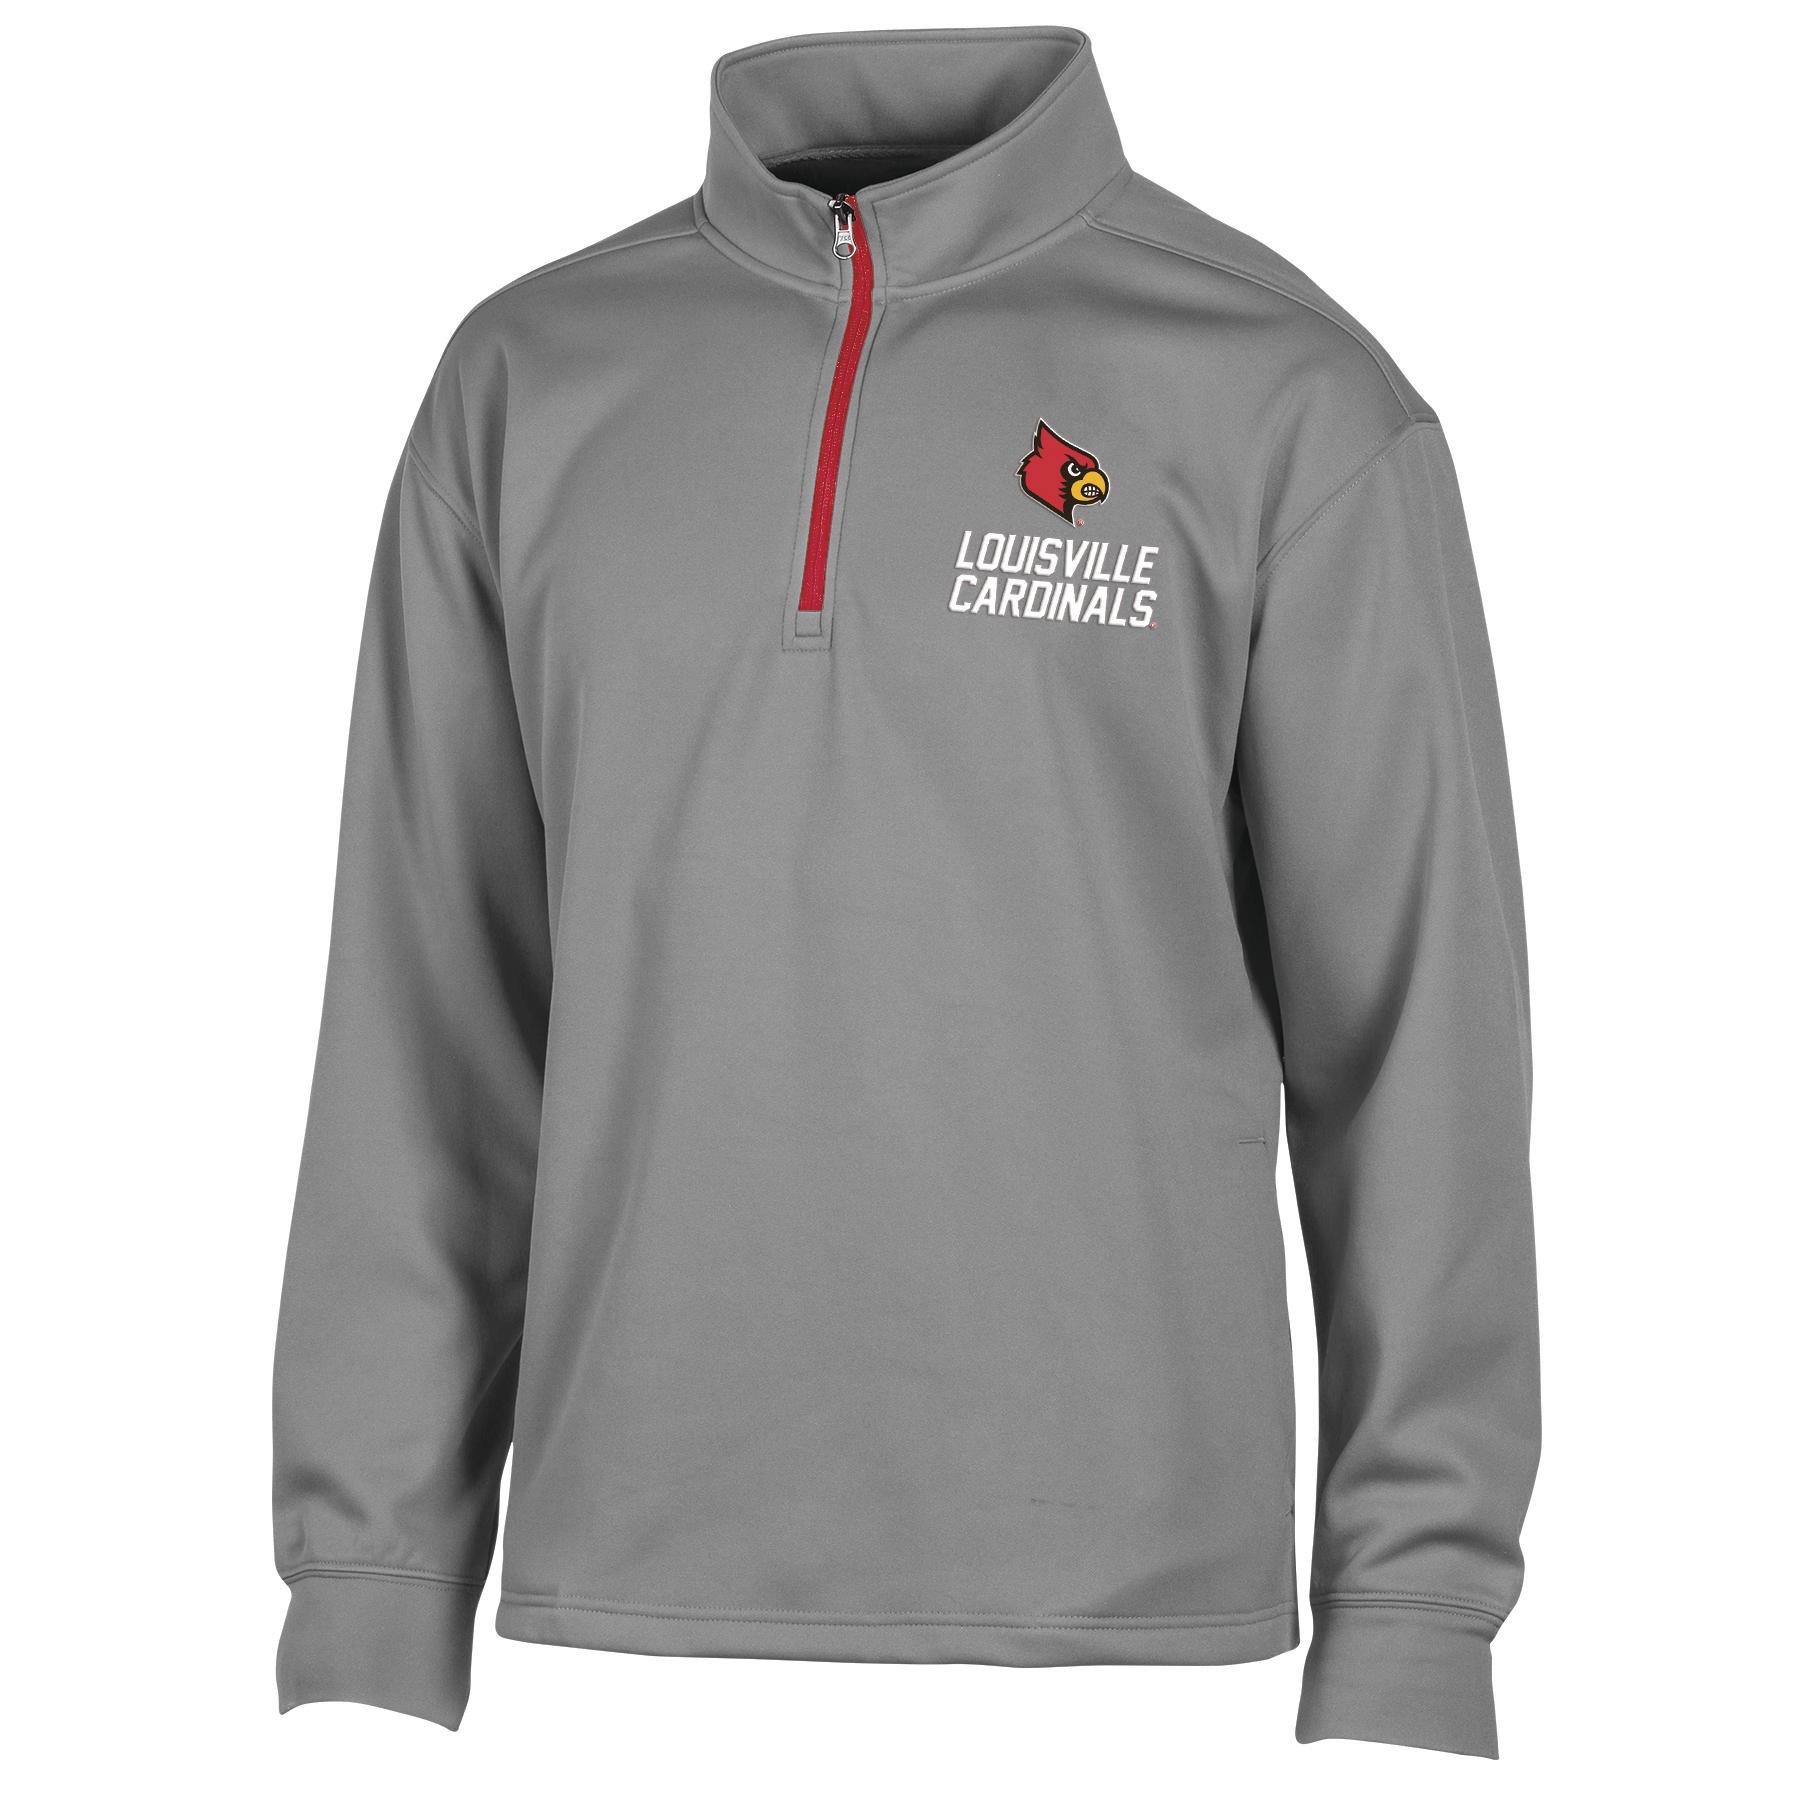 NCAA Men's Quarter-Zip Shirt - University of Louisville Cardinals